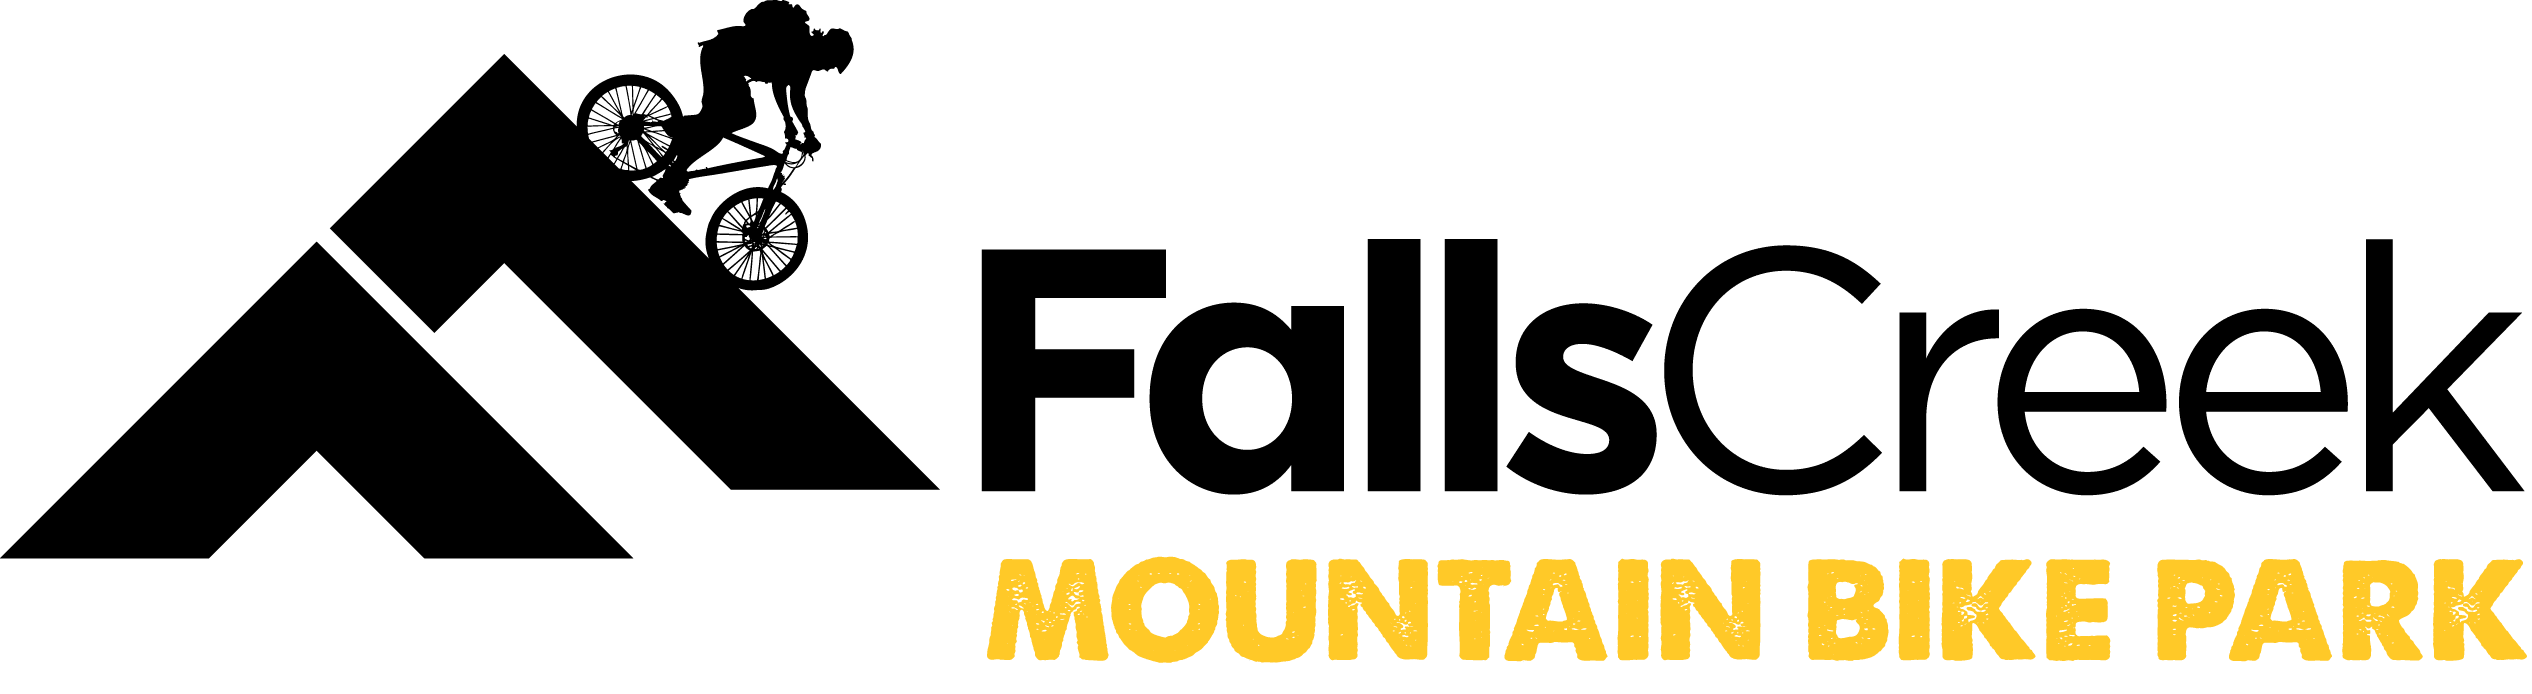 MTB Logo - Falls Creek Mountain Bike Parkkm trails